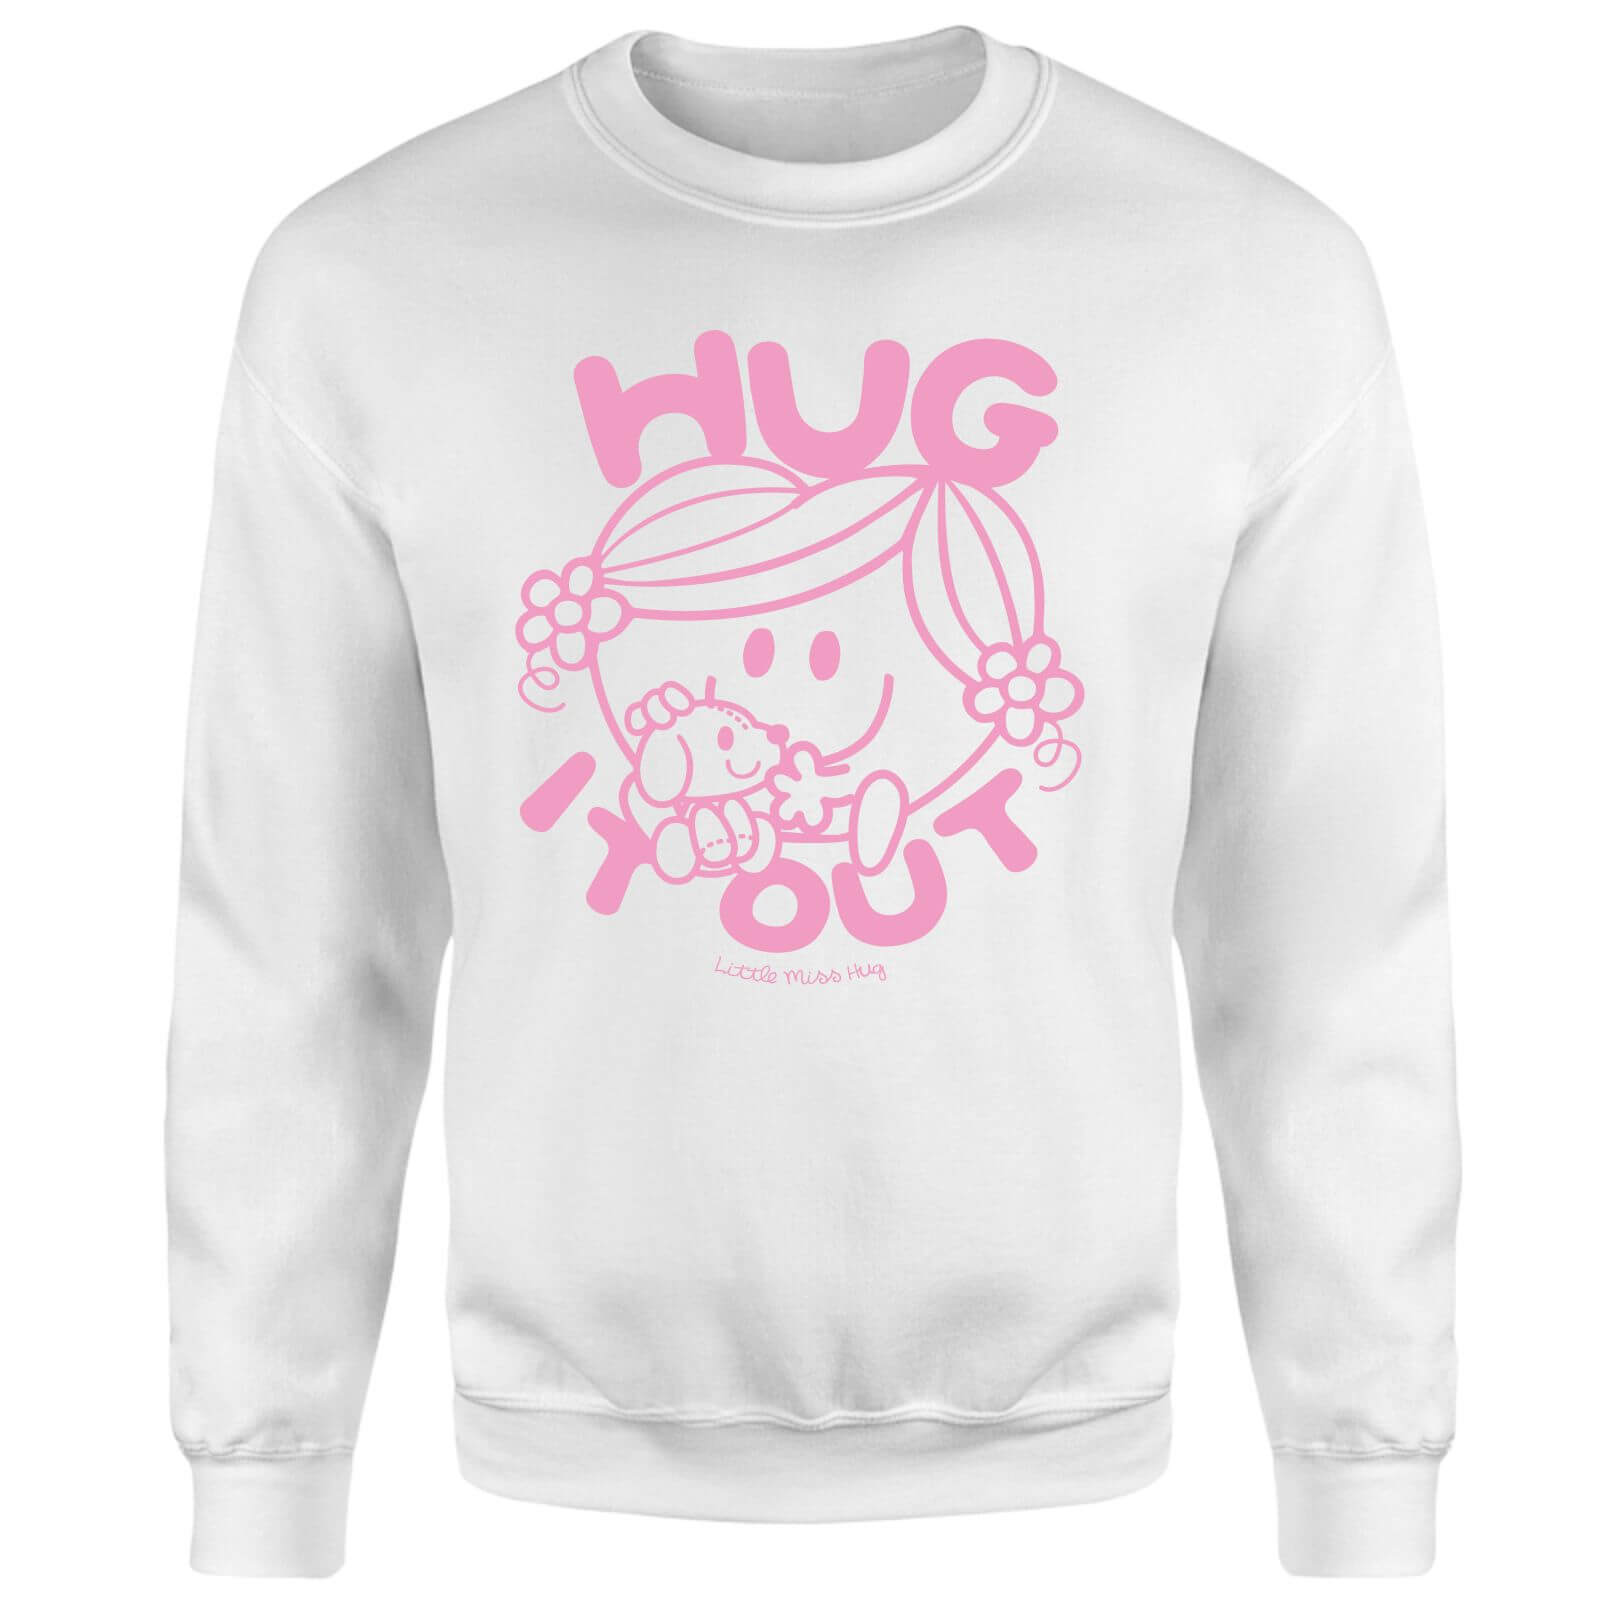 Mr Men & Little Miss Little Miss Hug Hug It Out Sweatshirt - White - XS - White